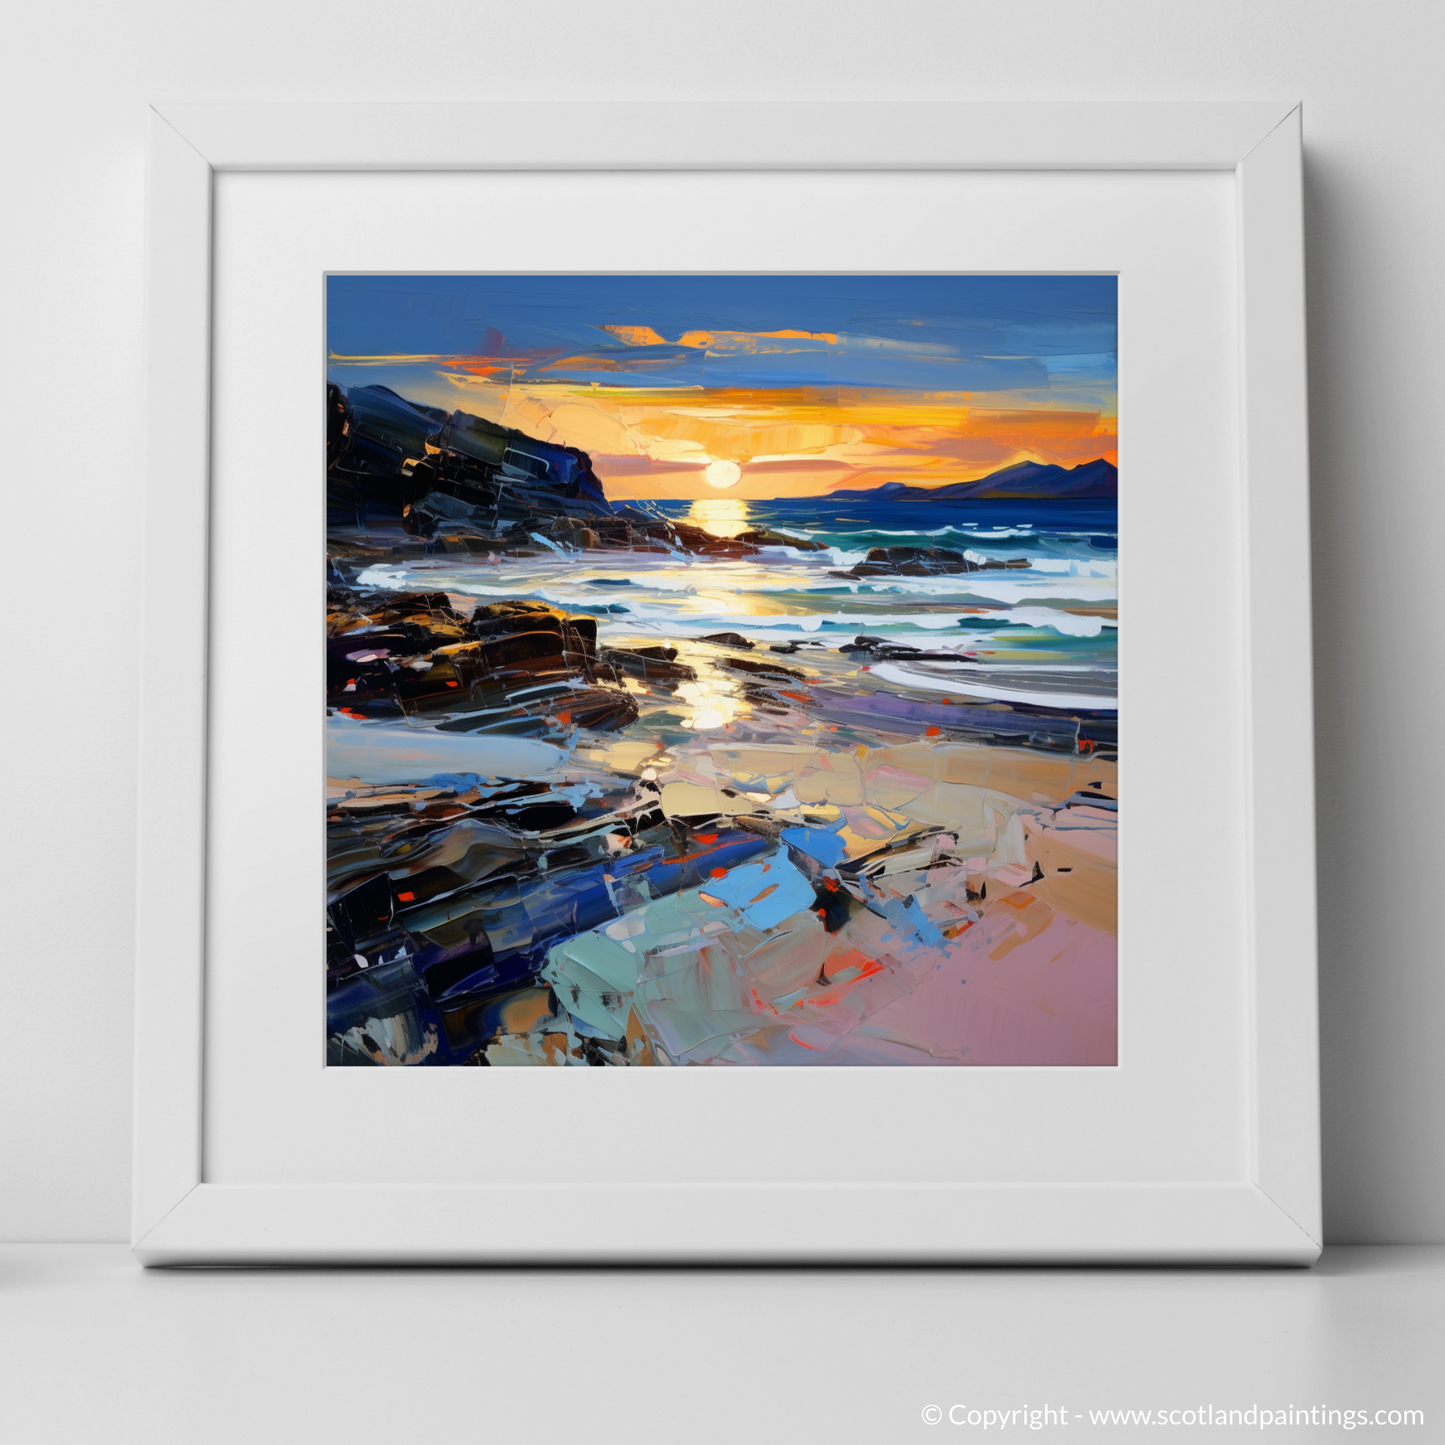 Art Print of Seilebost Beach at dusk with a white frame